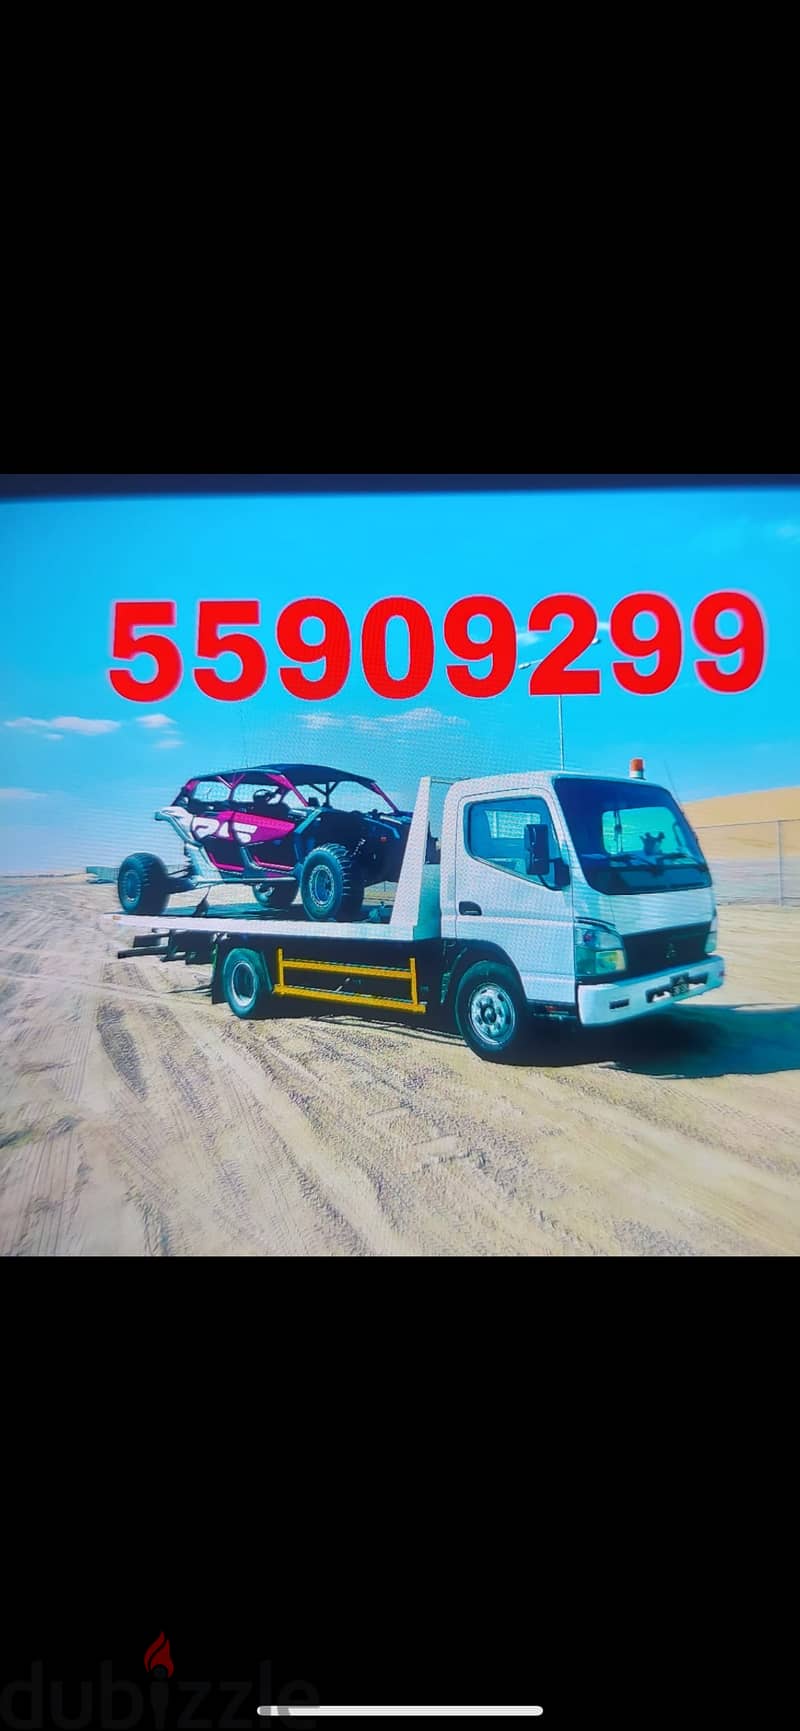 #Breakdown  #Madinat #Khalifa 55909299 #Tow truck #Madinat #khalifa 0